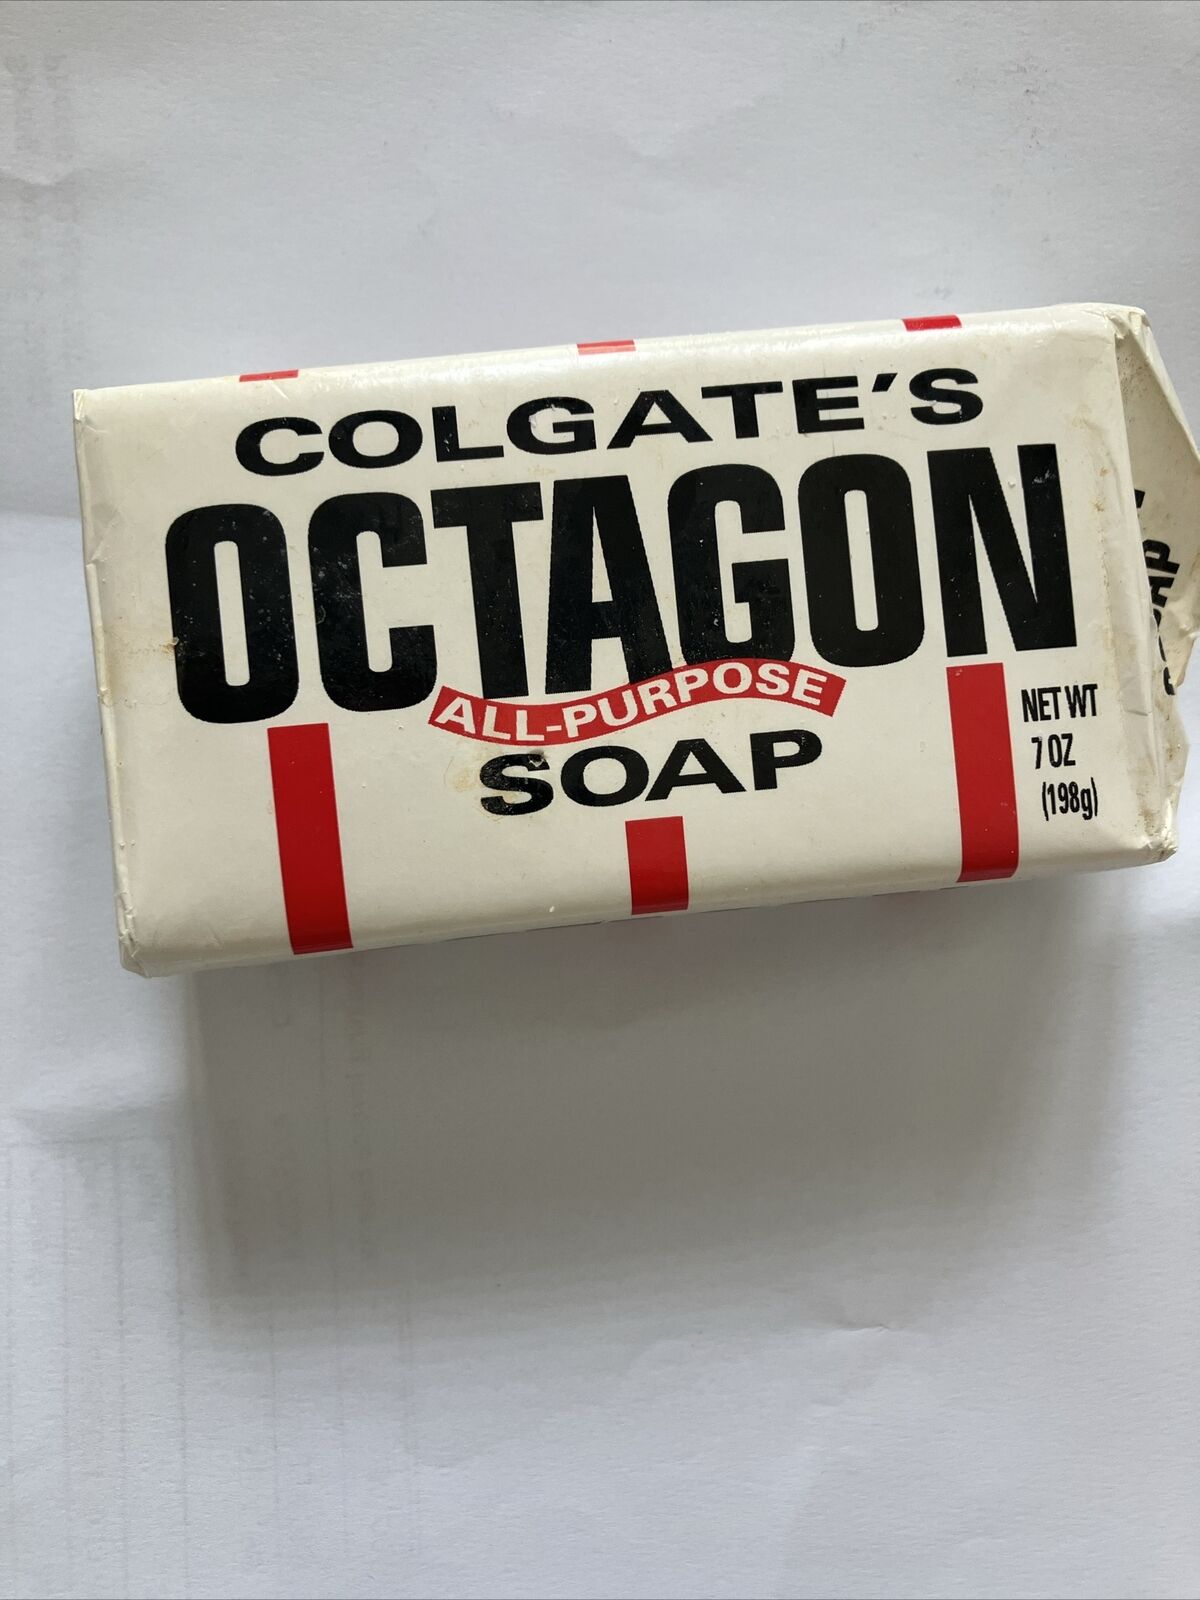 Vintage Colgate\'s Octagon All-Purpose Large Soap 7 oz